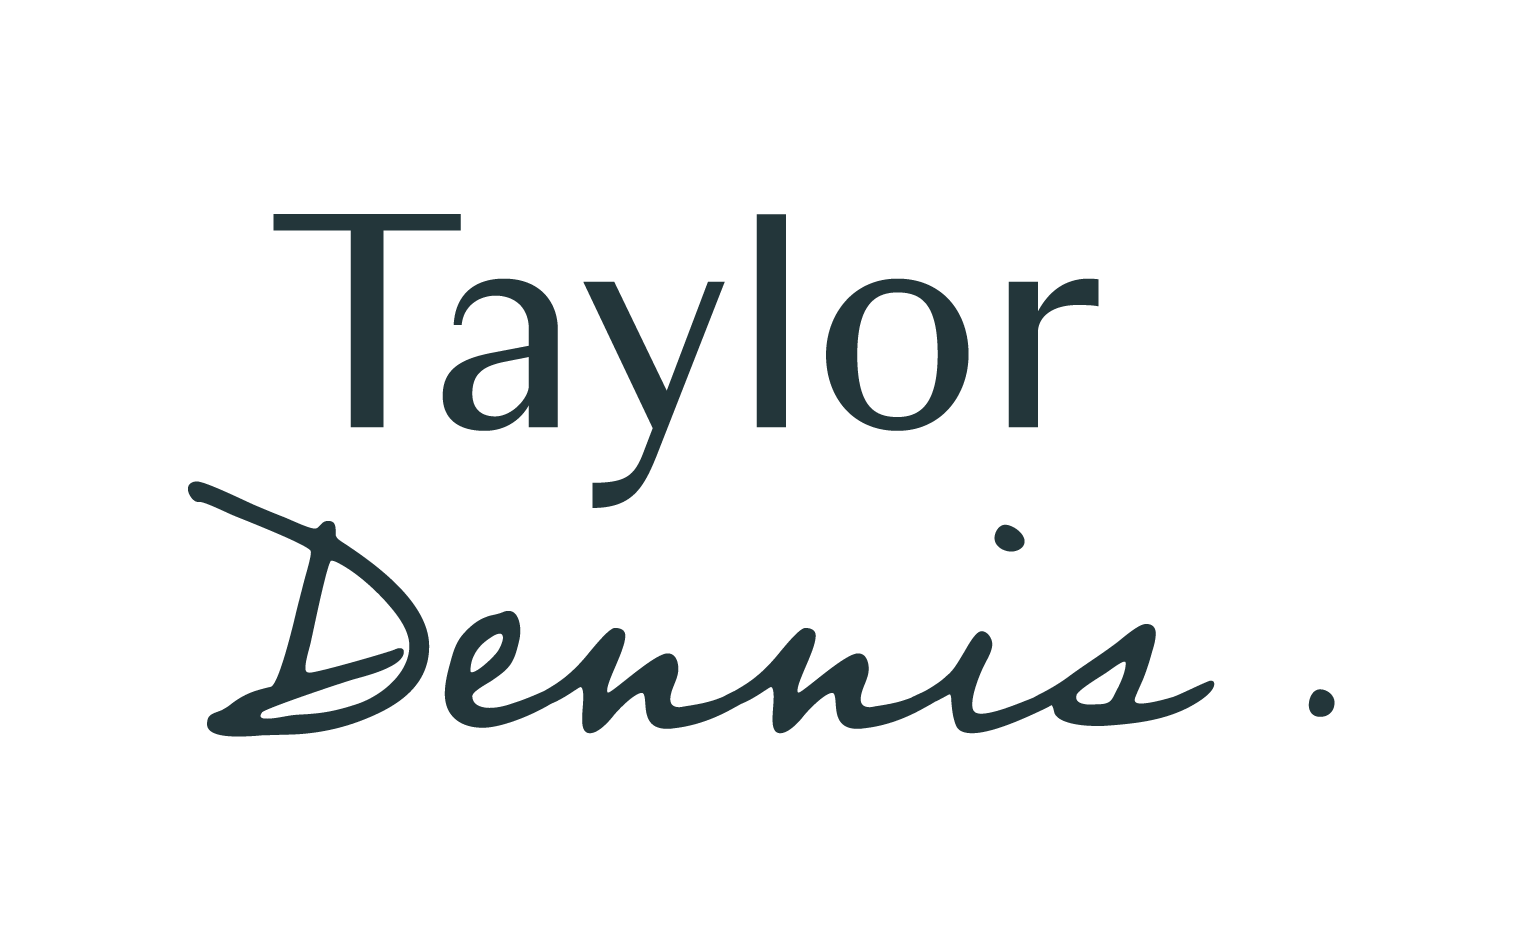 Taylor Dennis